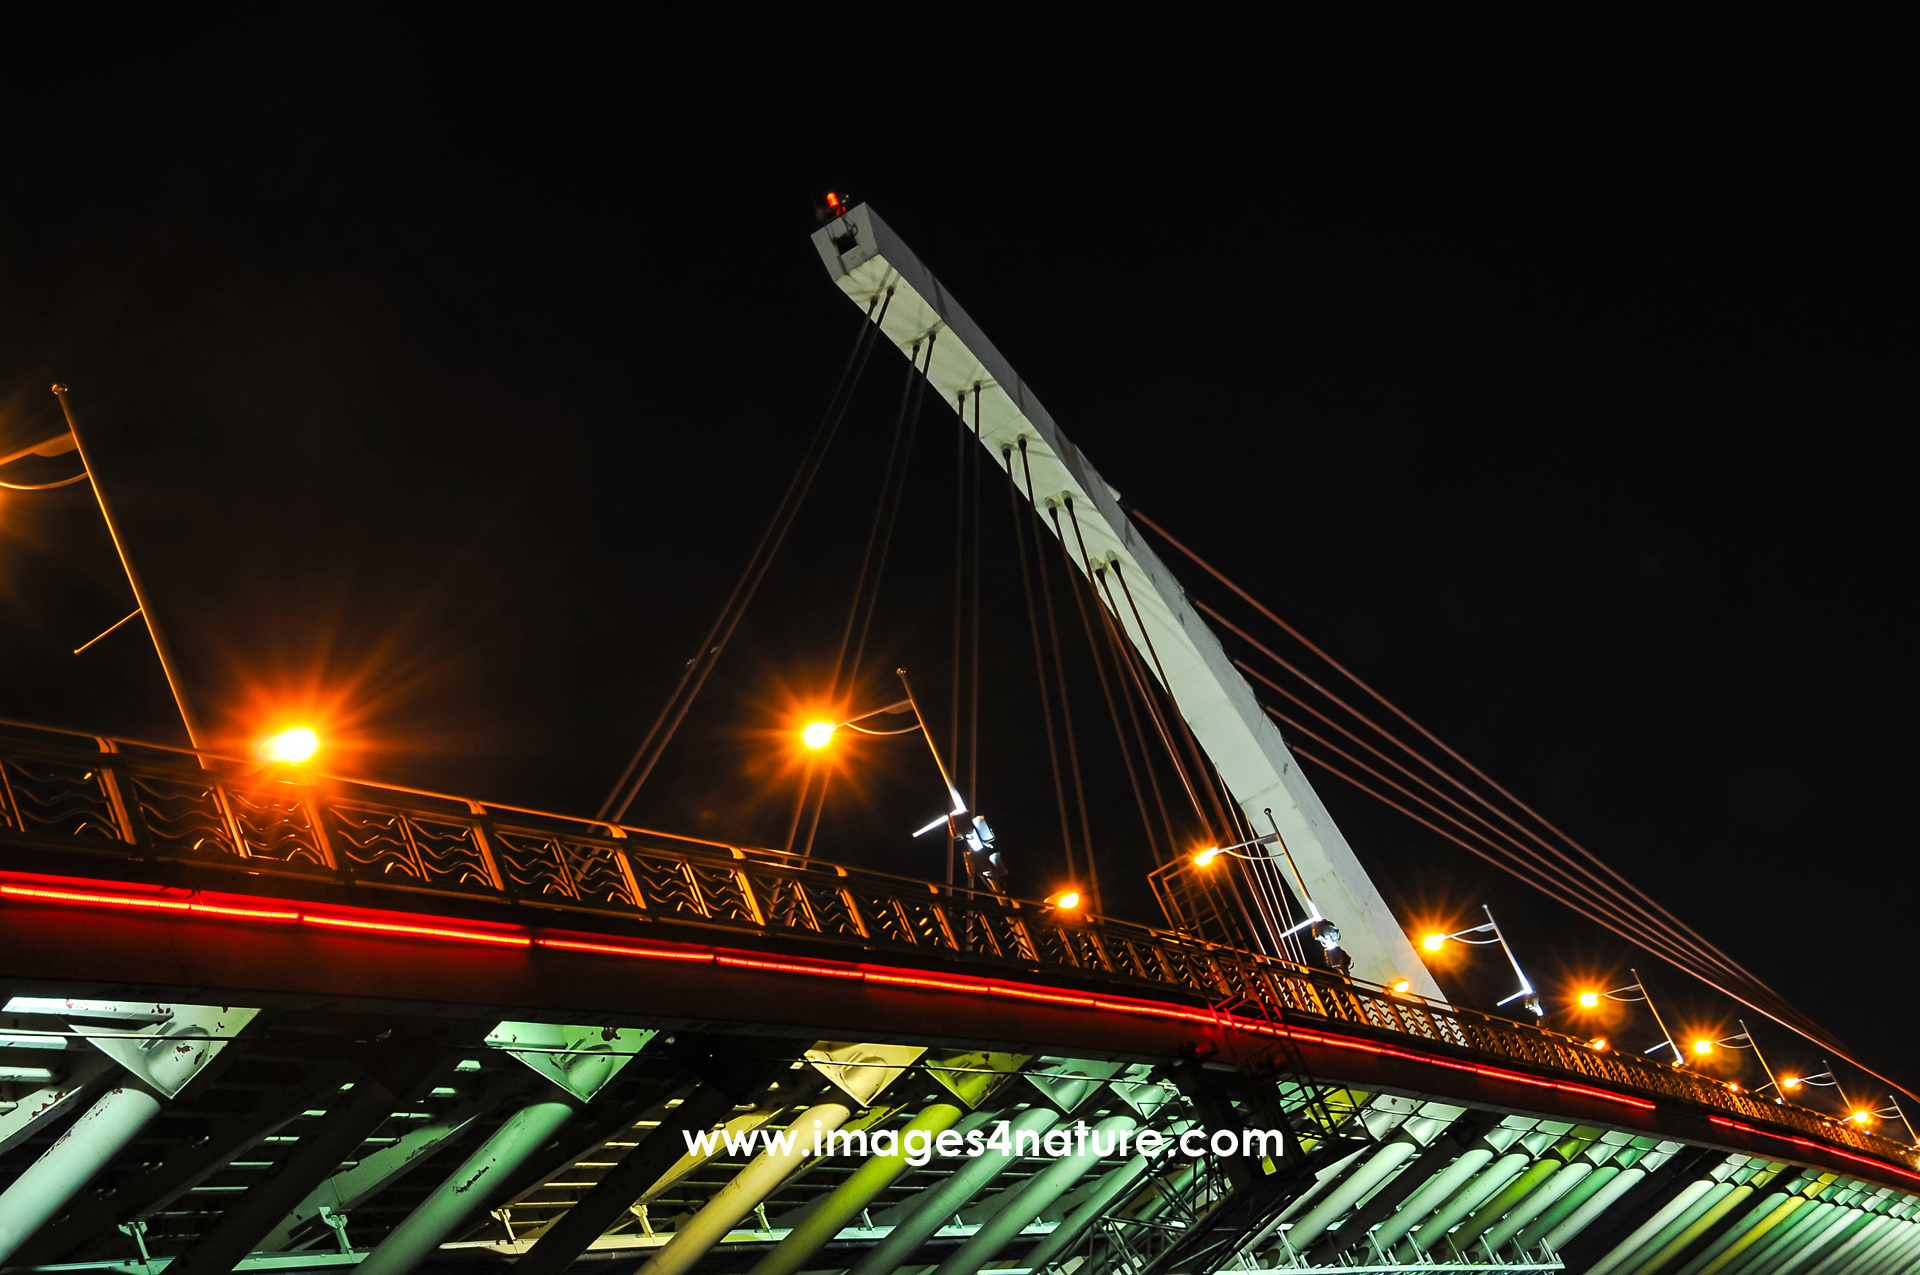 View from below on Taipei's Dazhi bridge at night